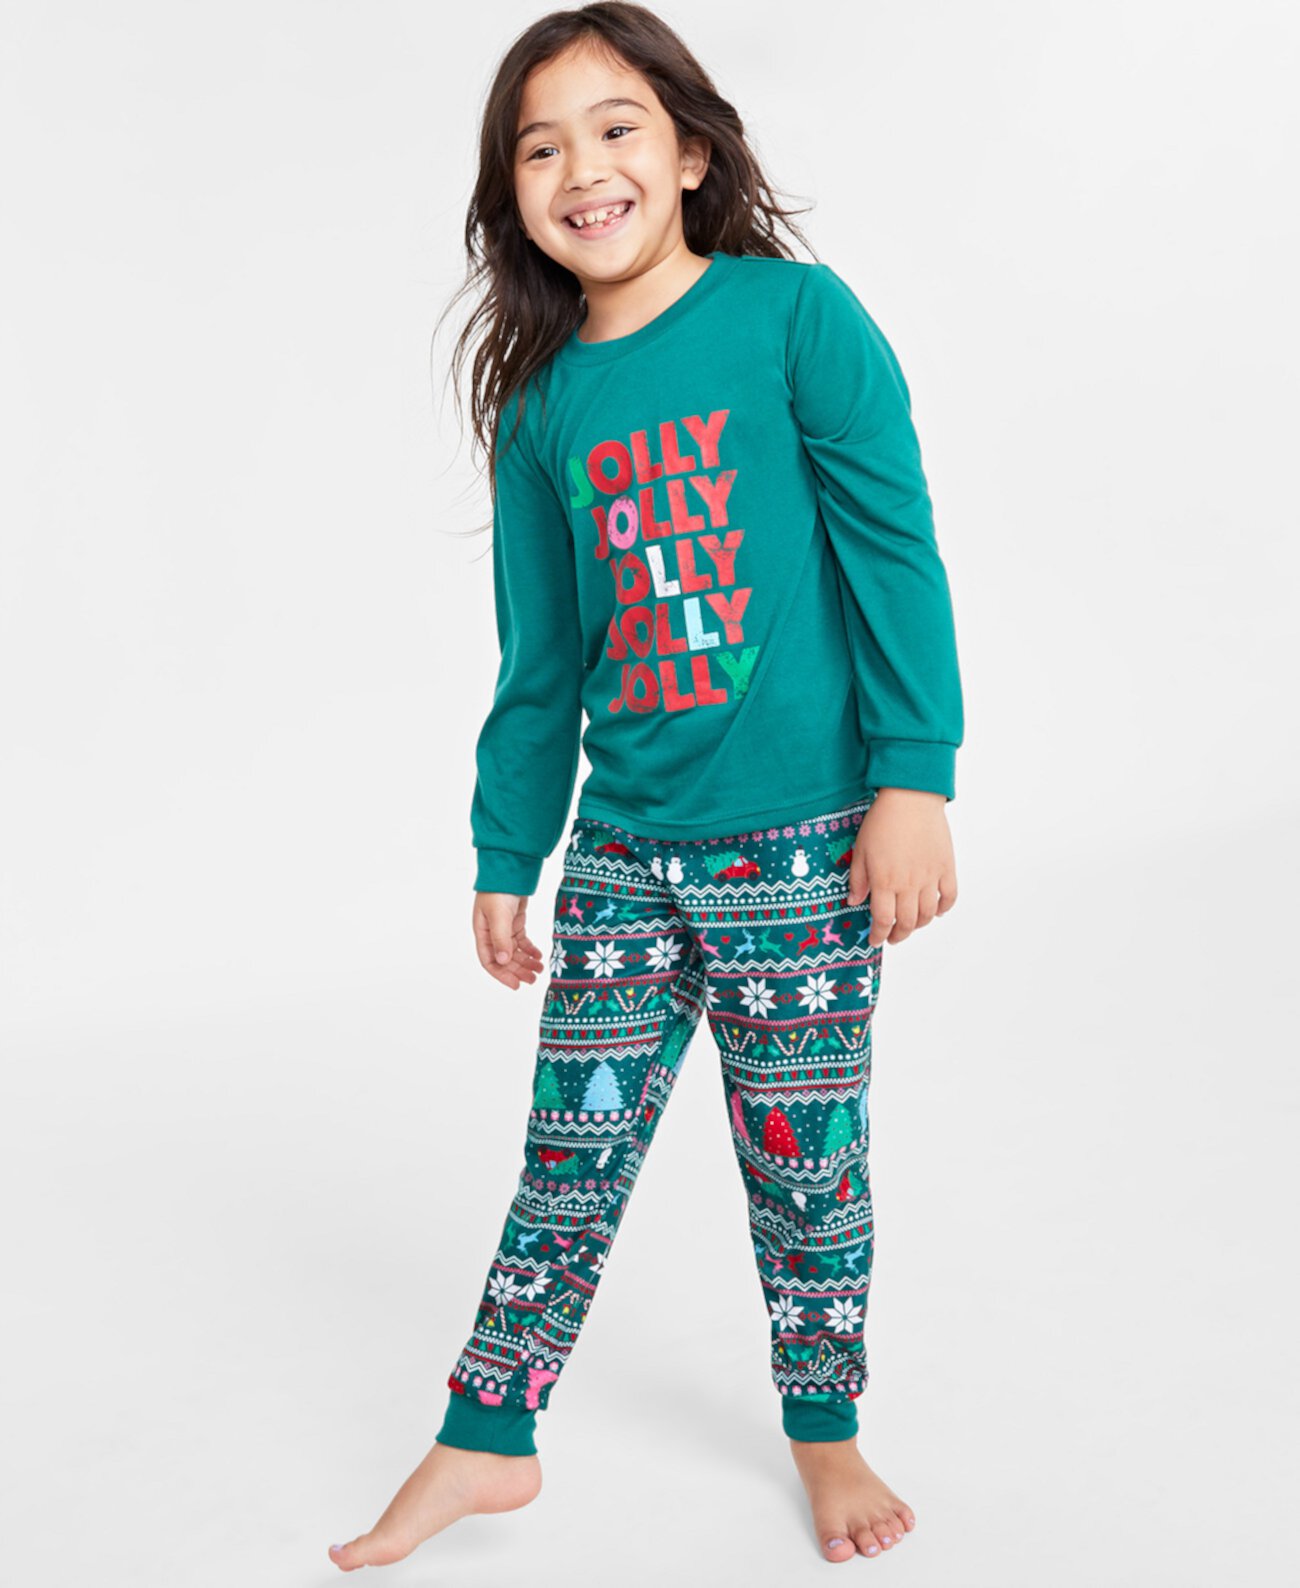 Toddler, Little & Big Kids Jolly Fair Pajamas Set, Created for Macy's Family Pajamas